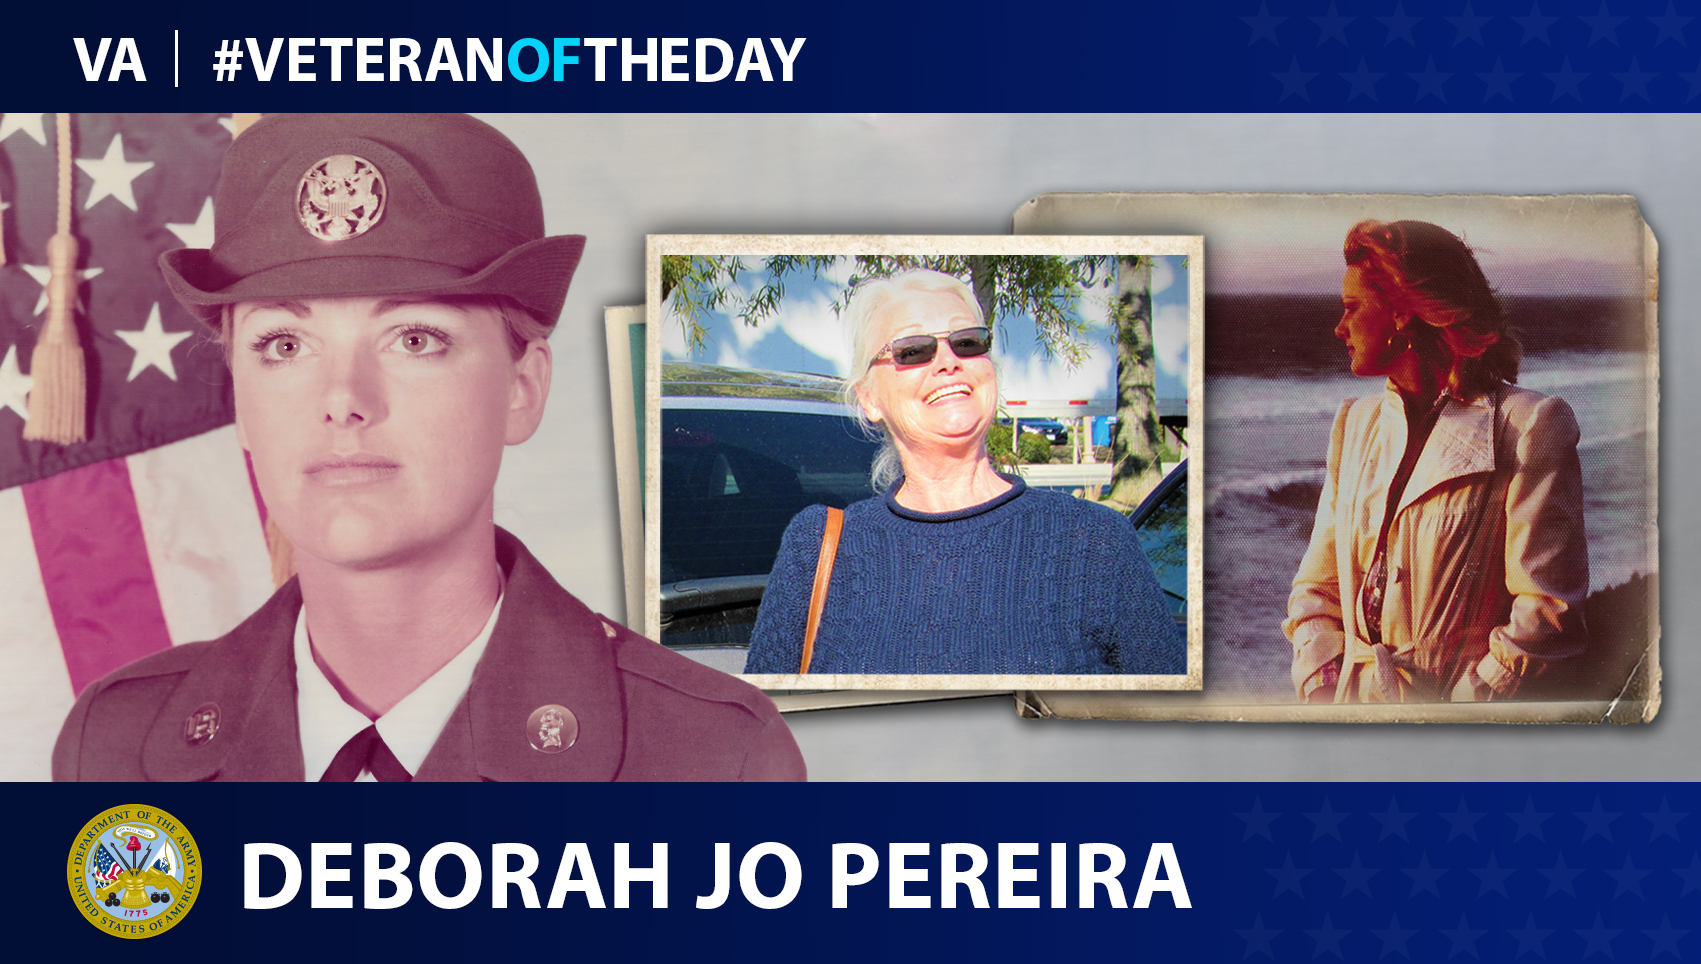 Army Veteran Deborah Jo Pereira is today’s Veteran of the Day.